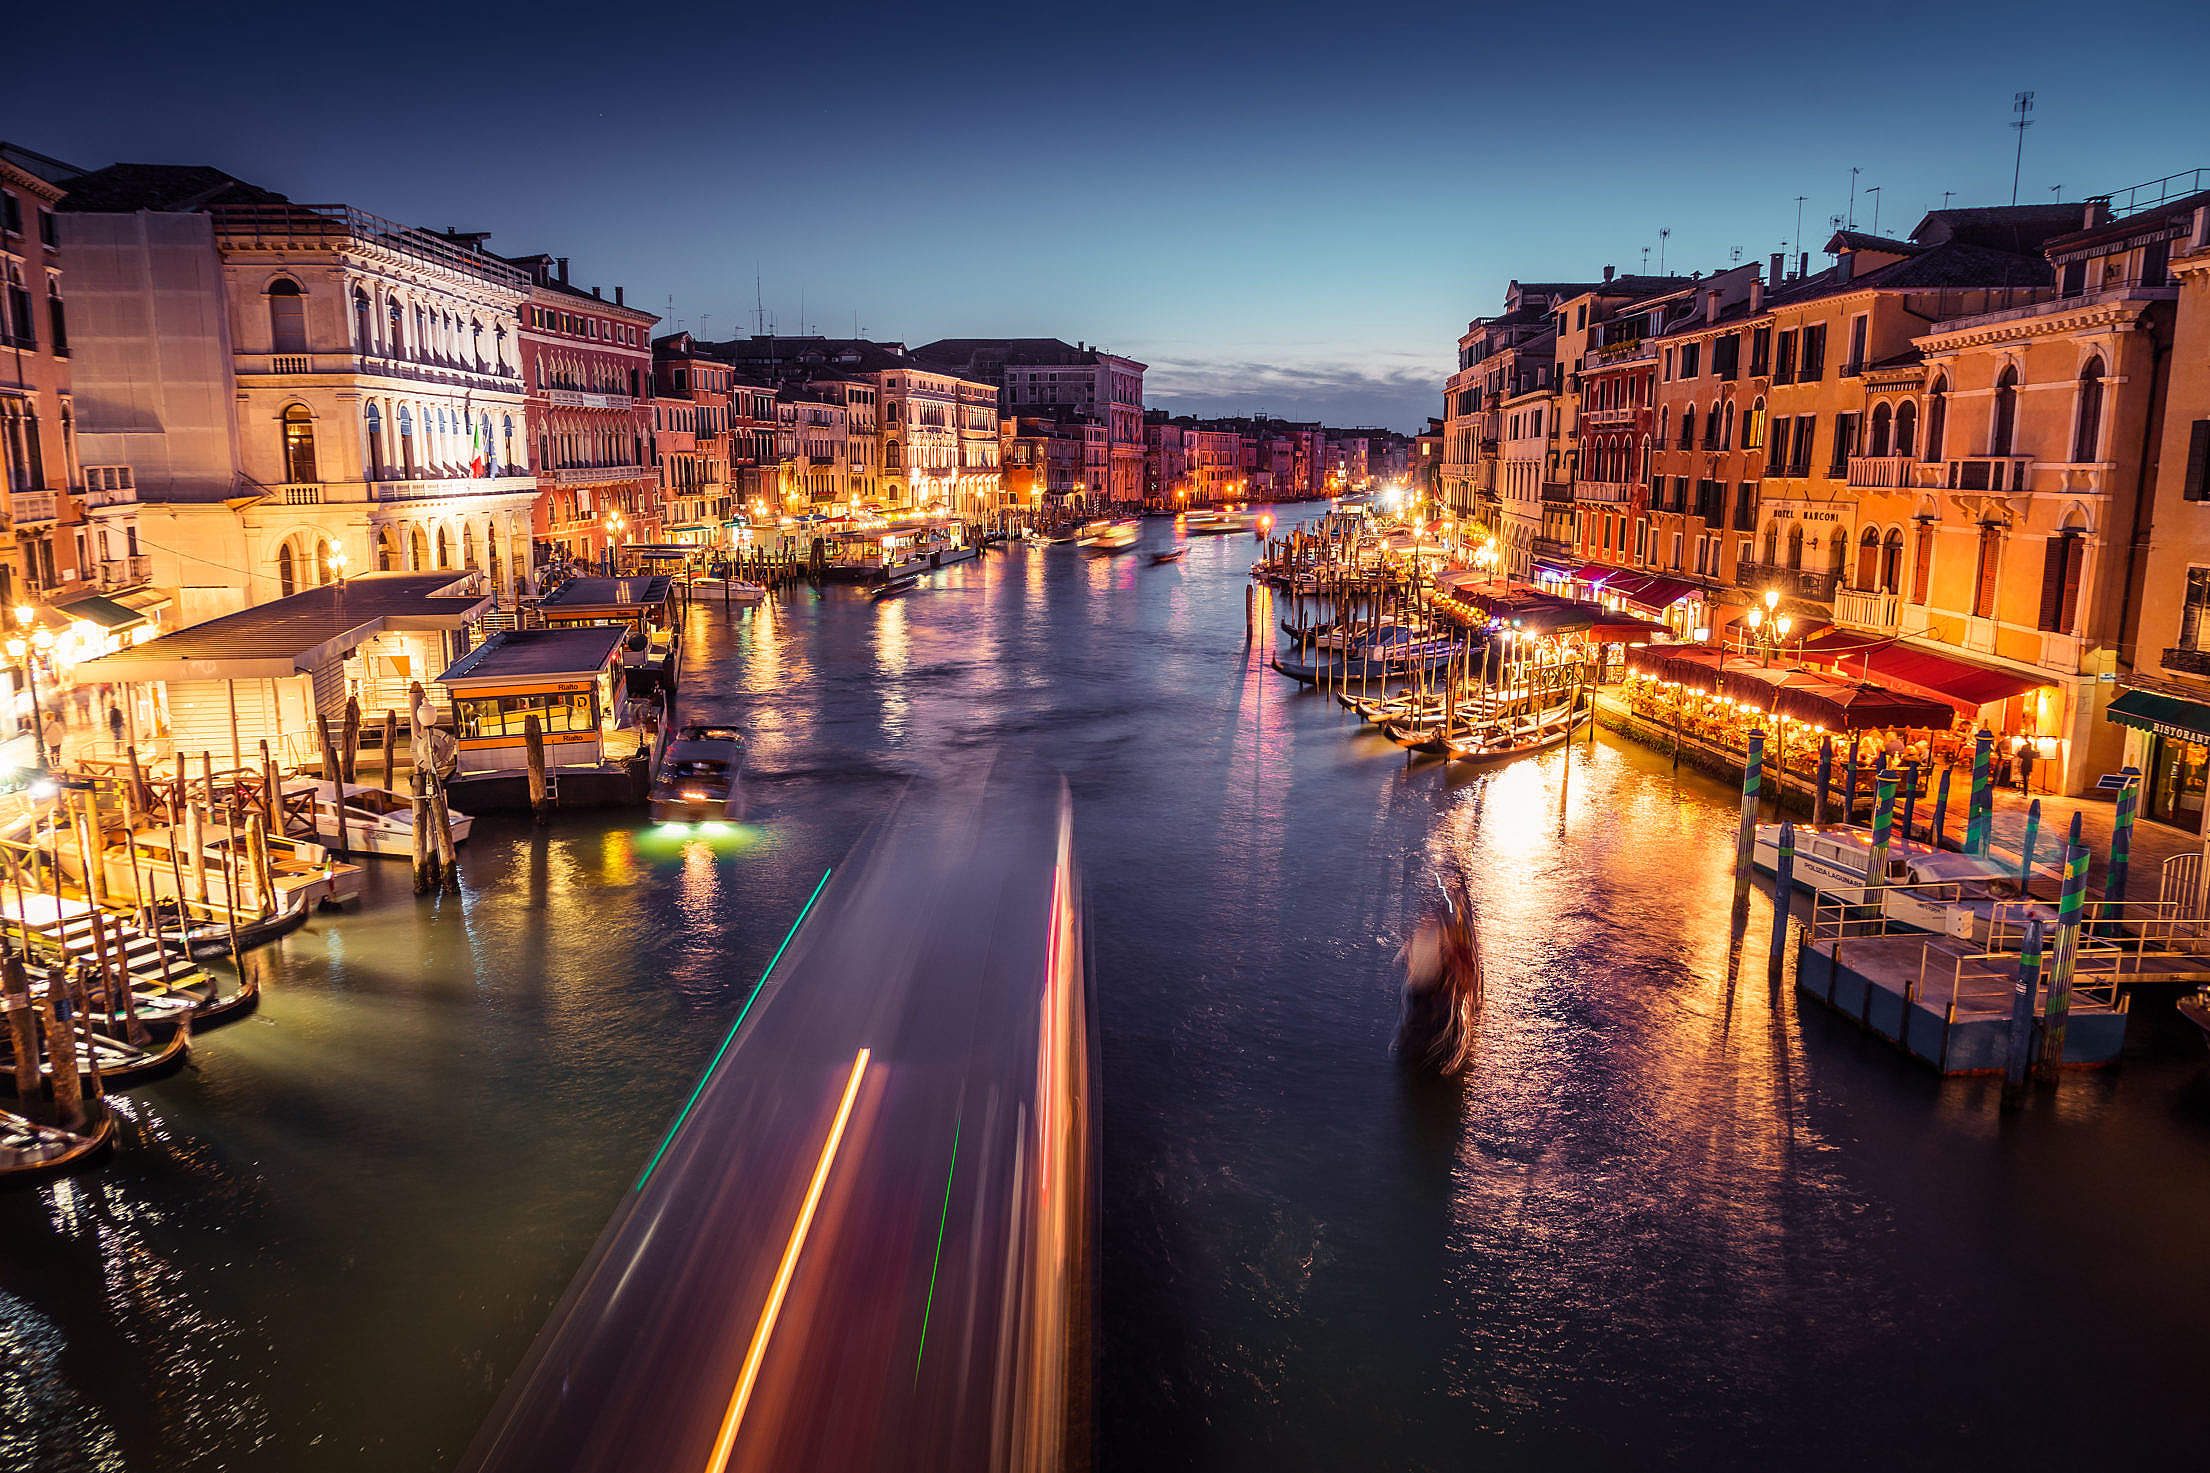 Venice Canal Grande at night